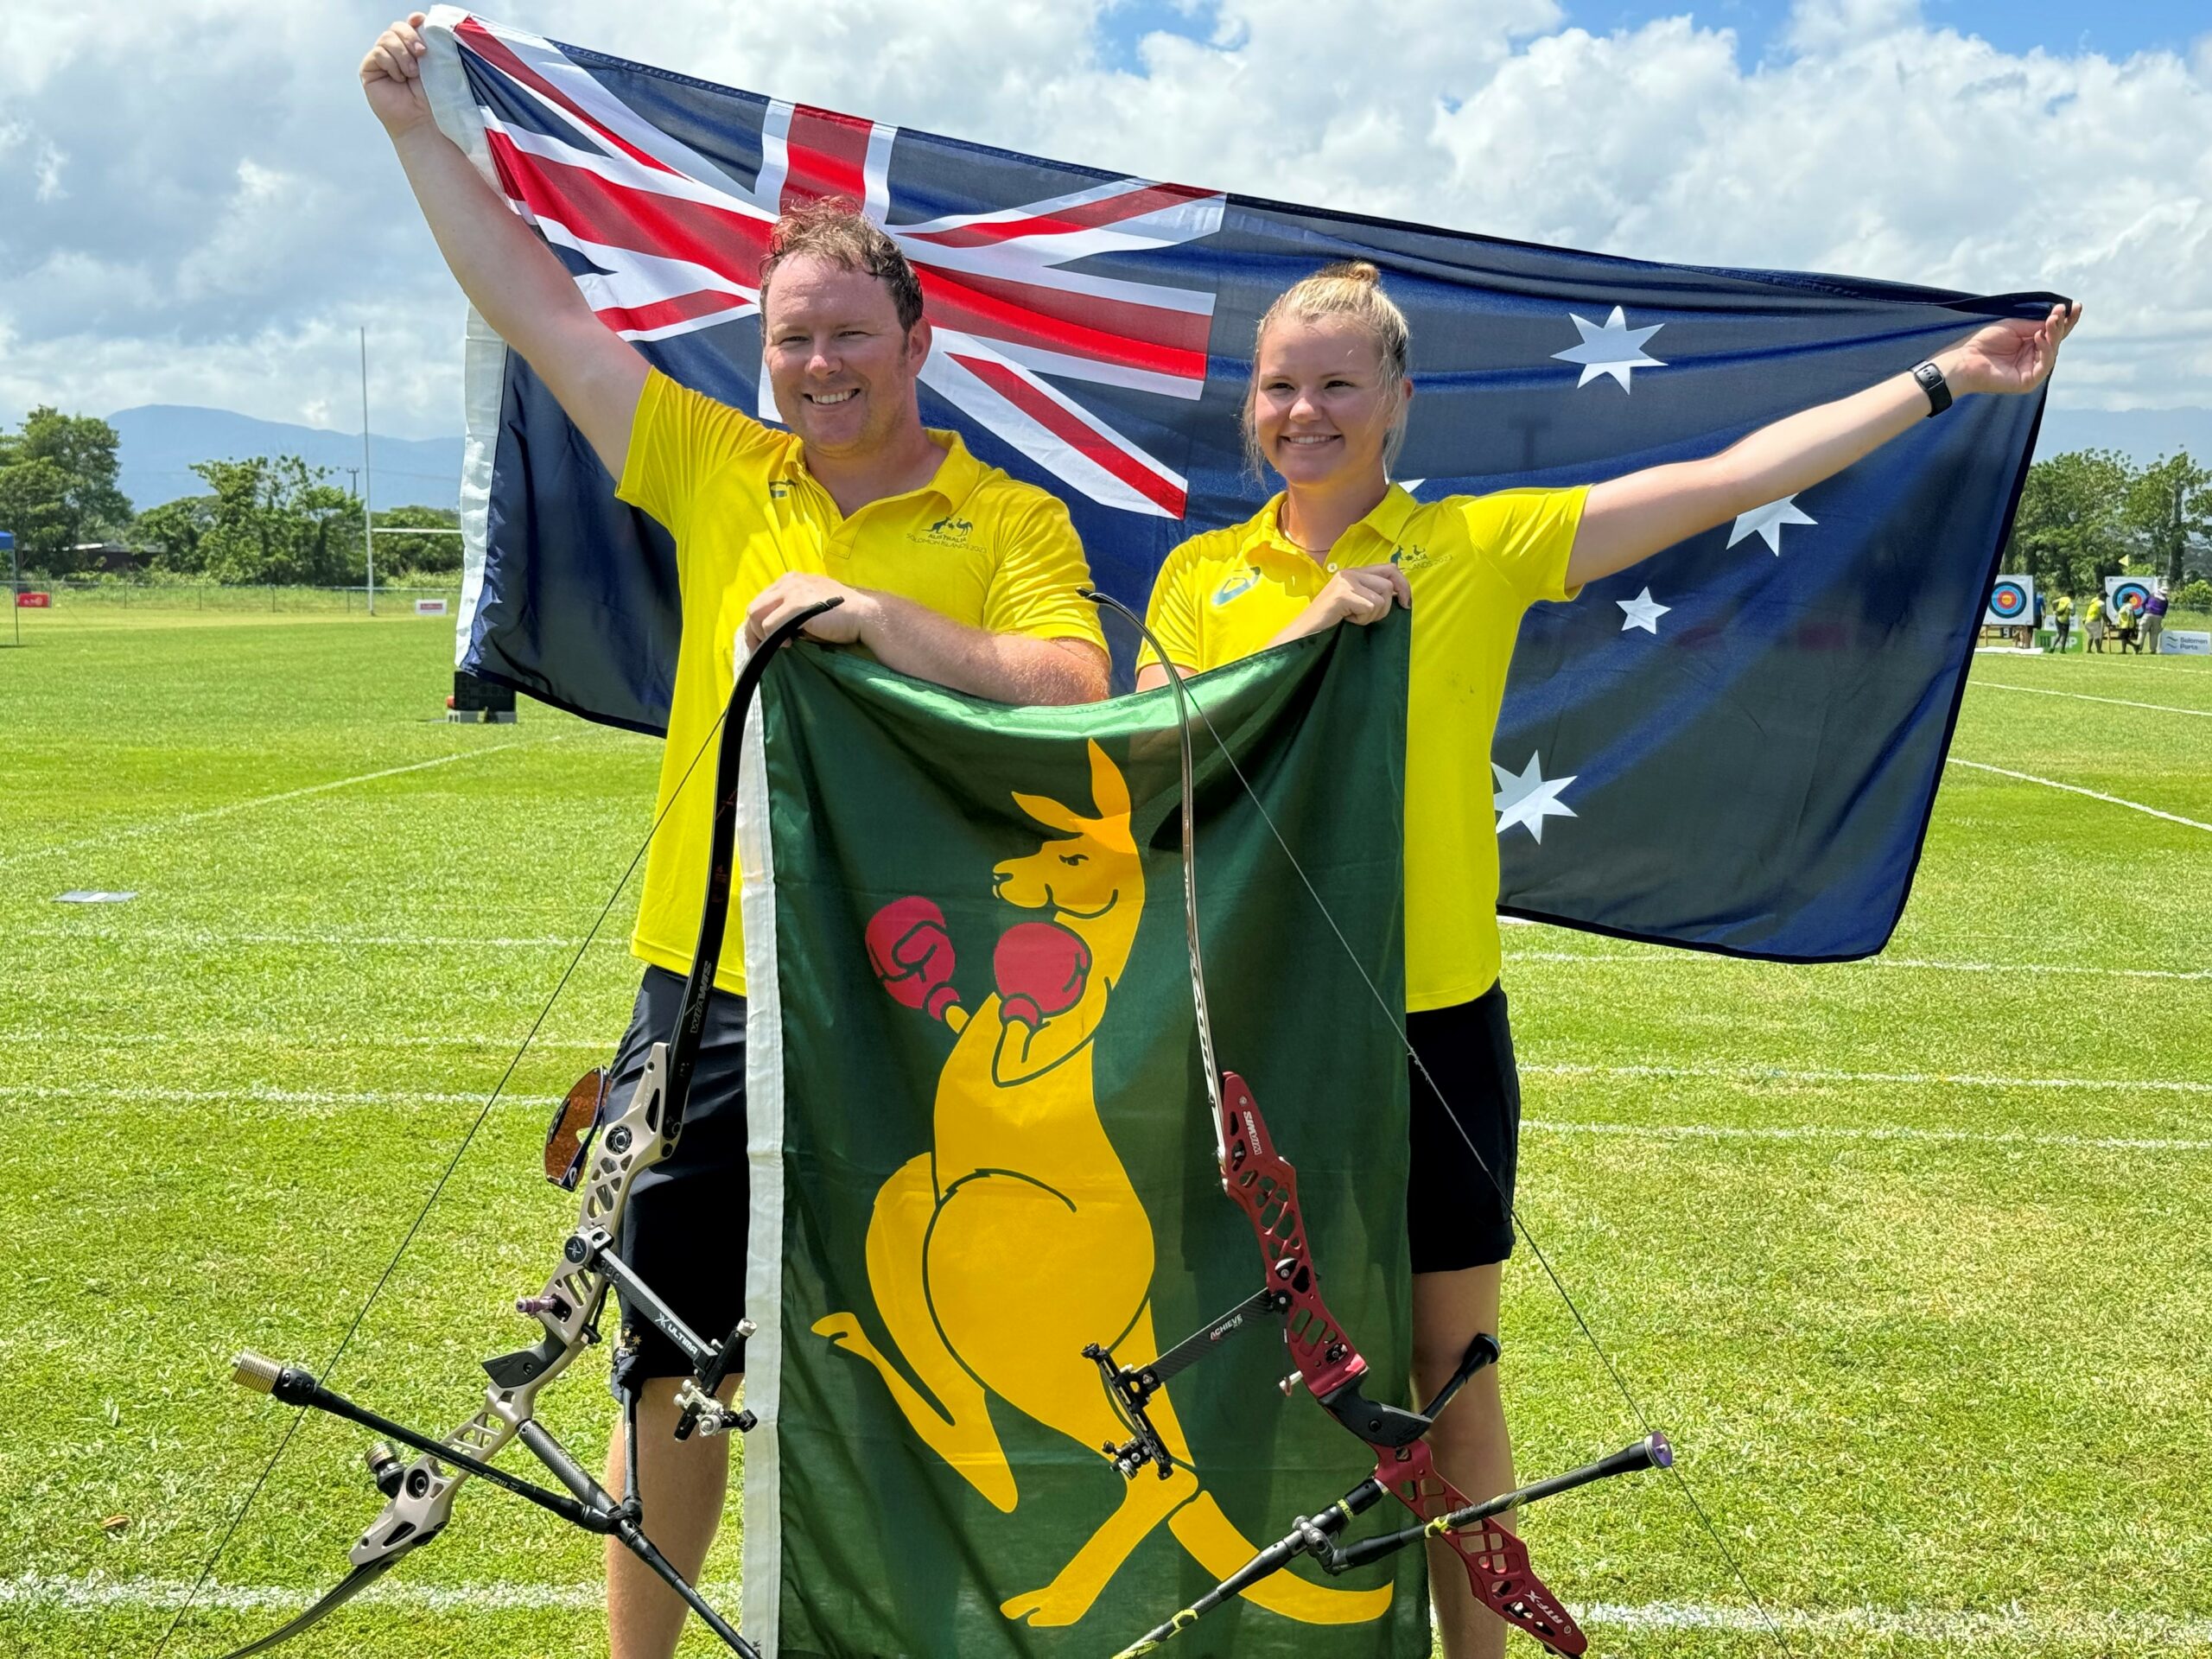 Two archery athletes holding an Australian flag